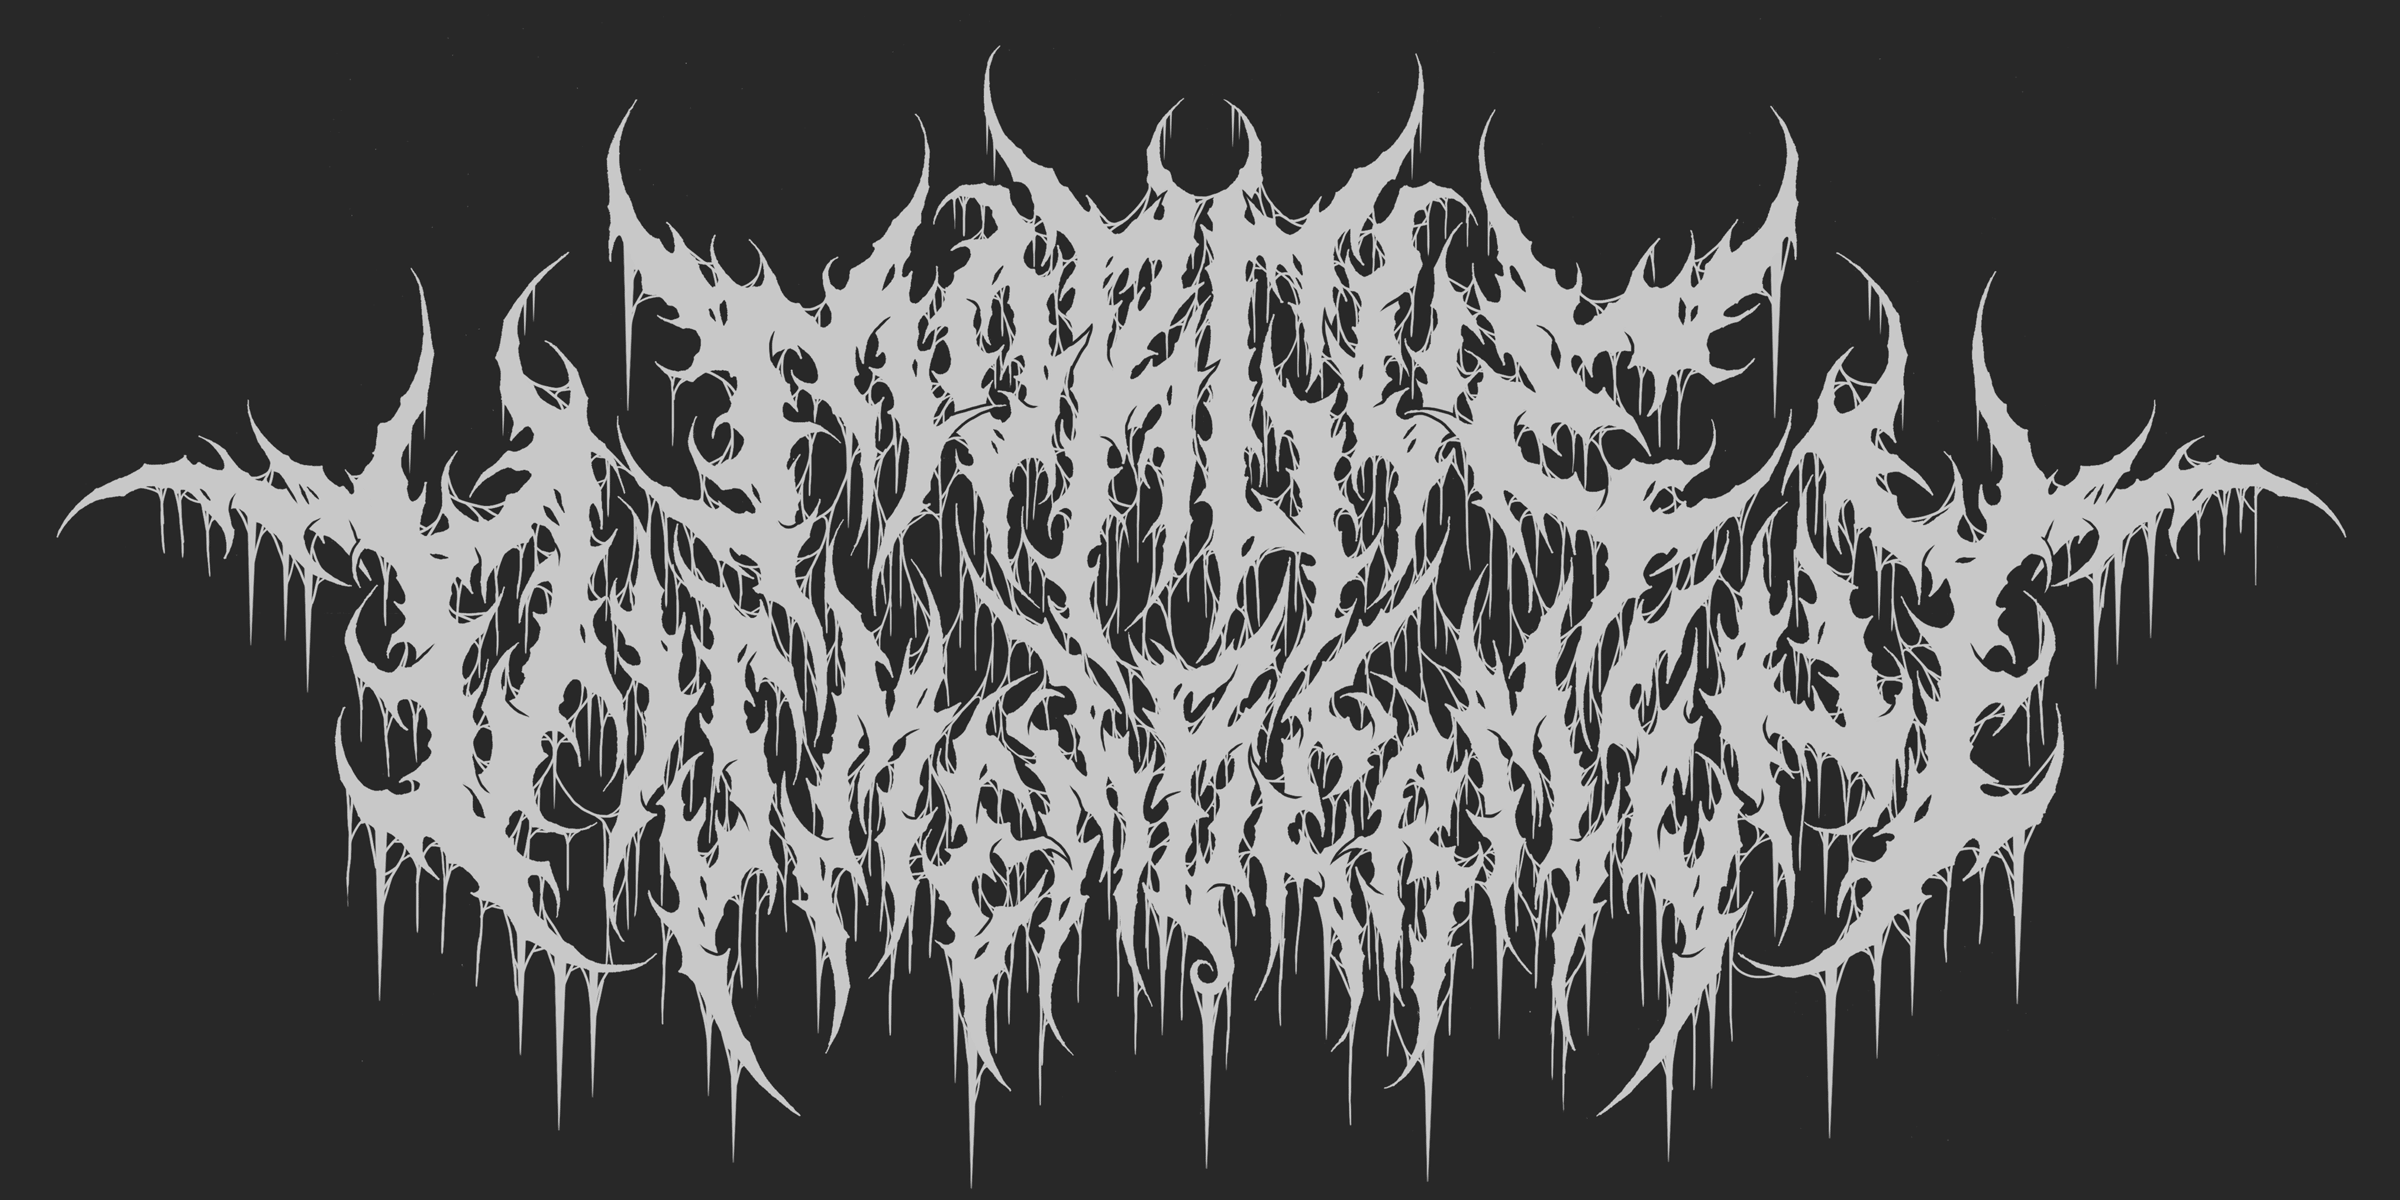 Morgue Dismemberment logo